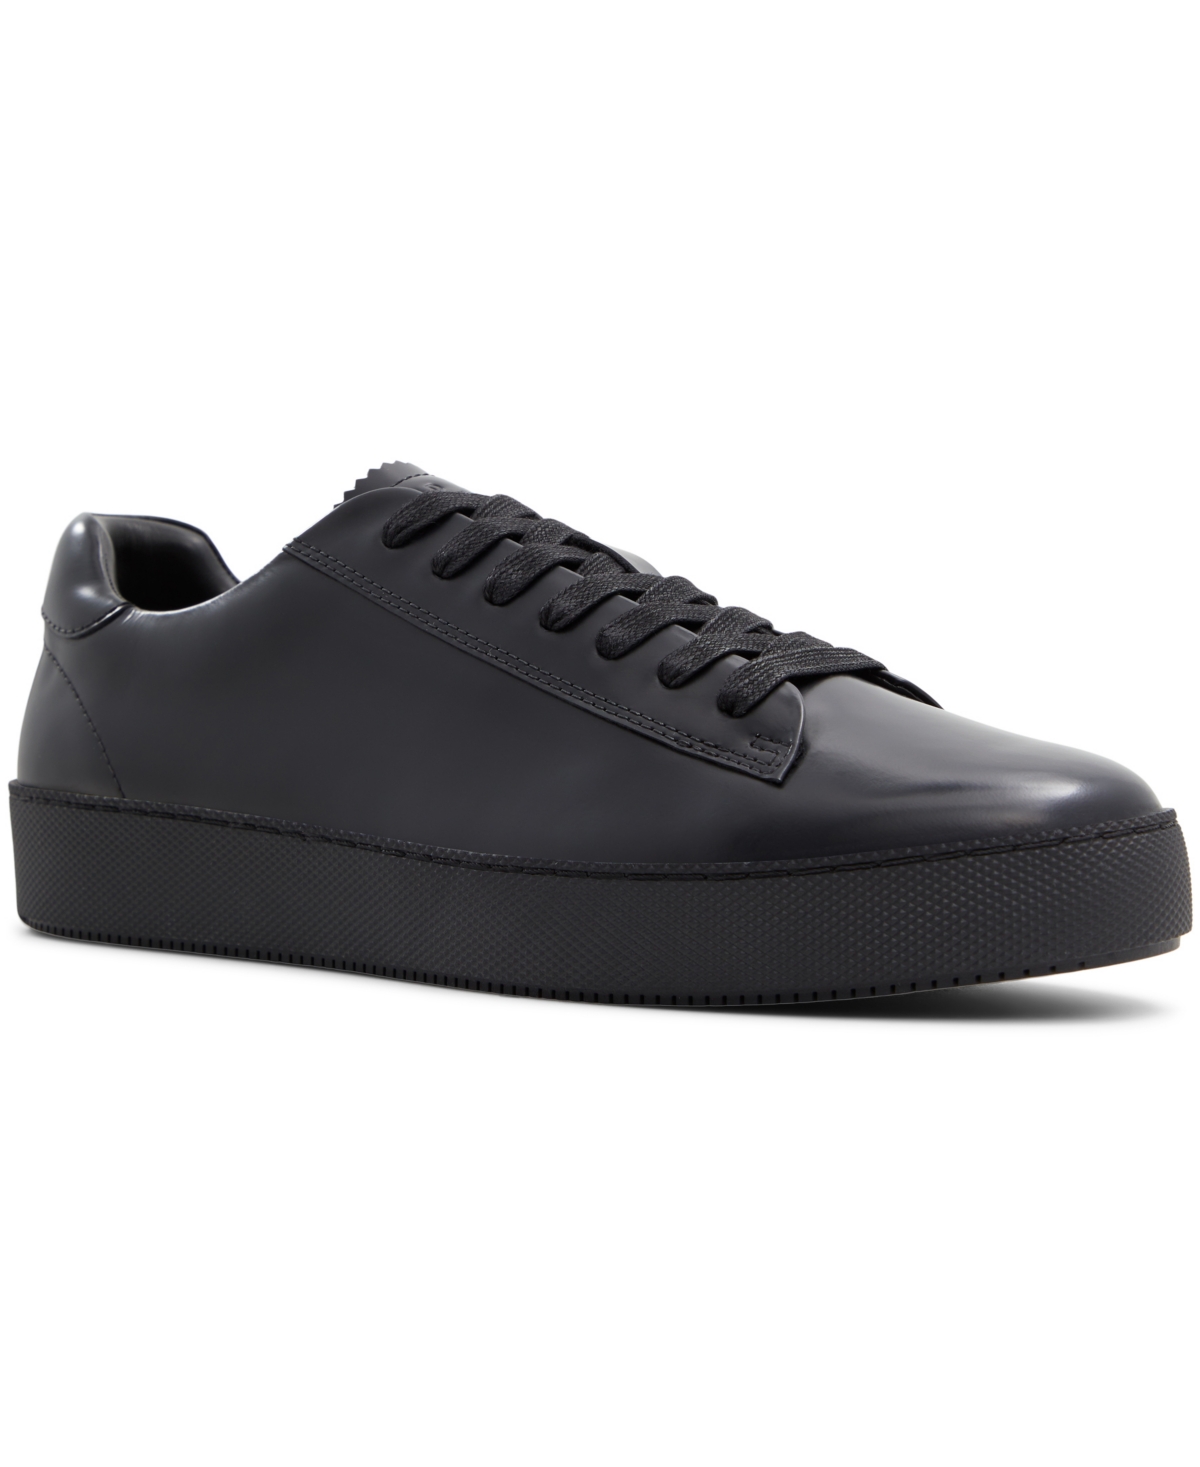 Men's Westwood Lace Up Sneakers - Black/Black